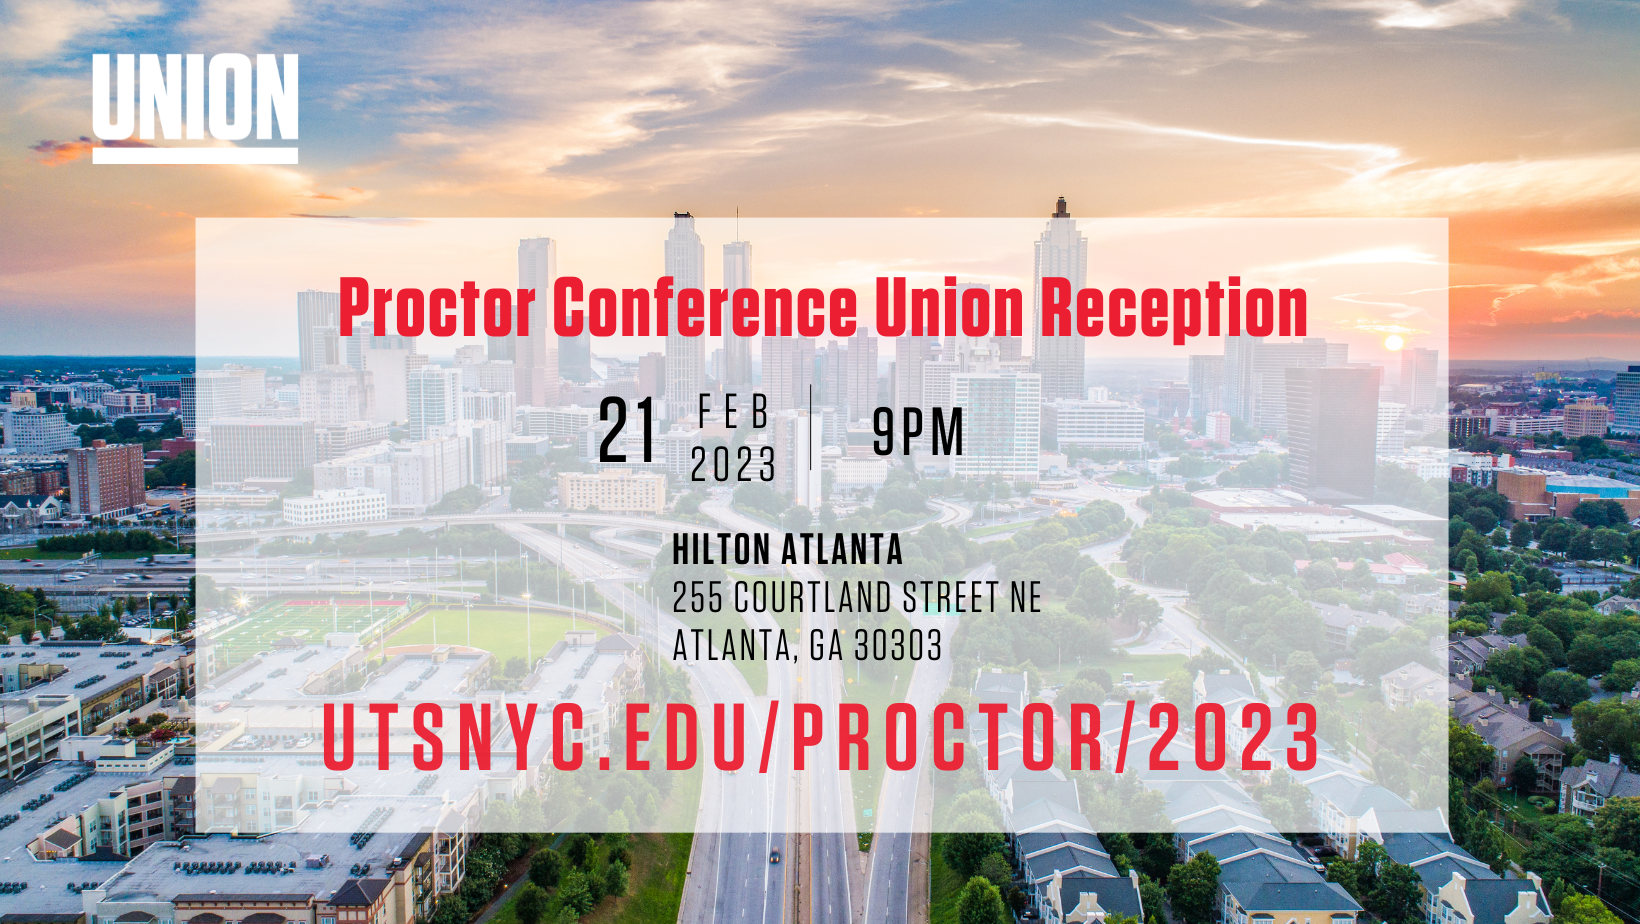 Proctor Conference Union Reception @ Hilton Atlanta Room 313 and 314 | Atlanta | Georgia | United States